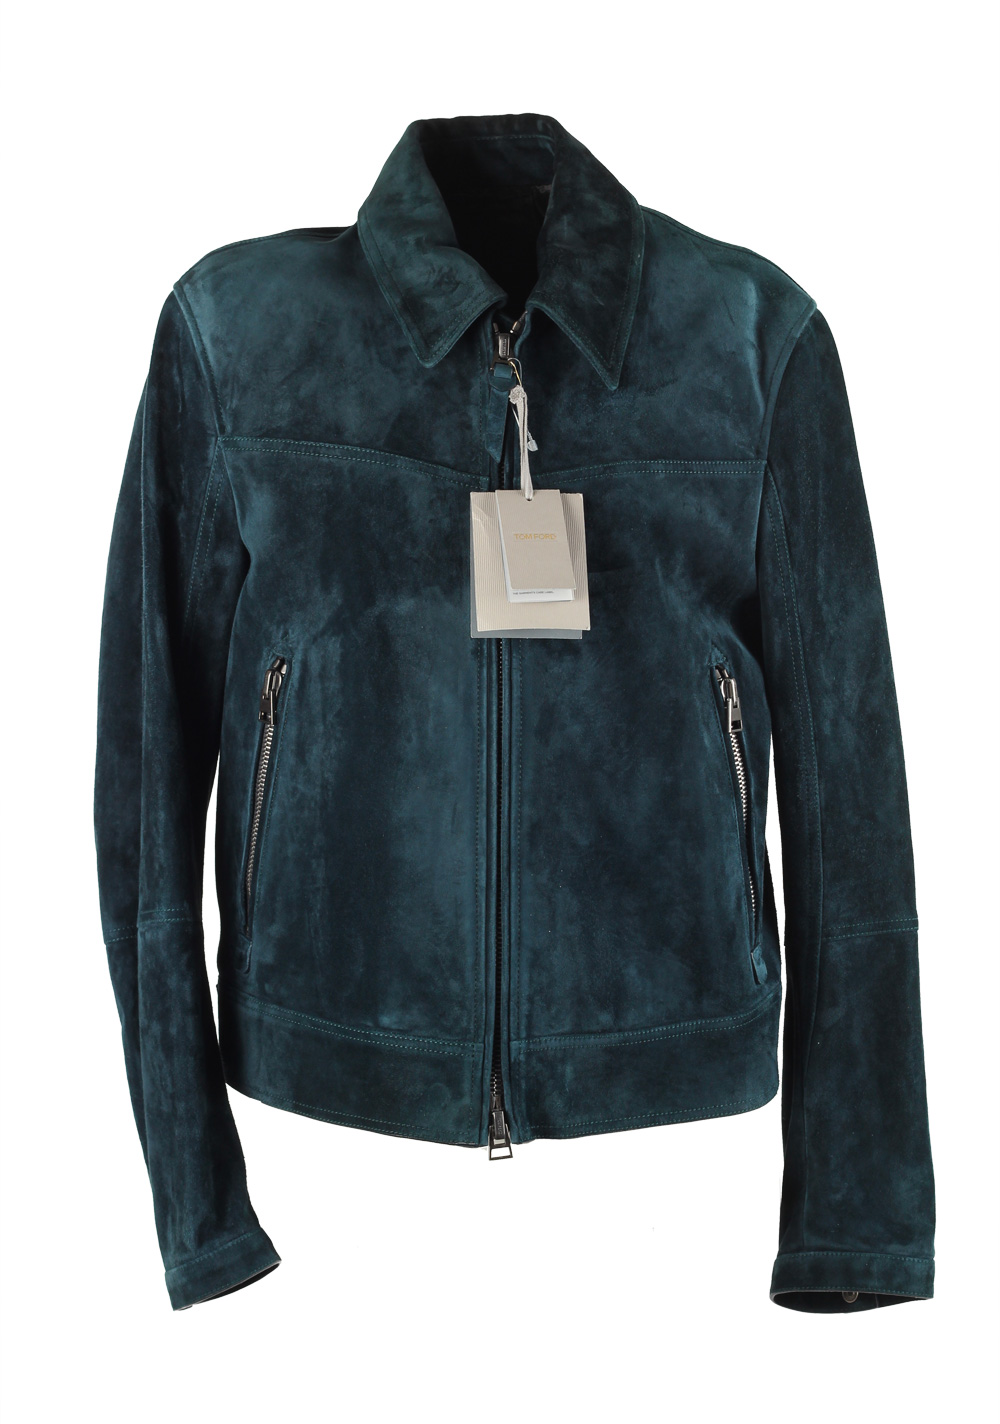 TOM FORD Teal Leather Suede Jacket Coat Size 50 / 40R U.S. 